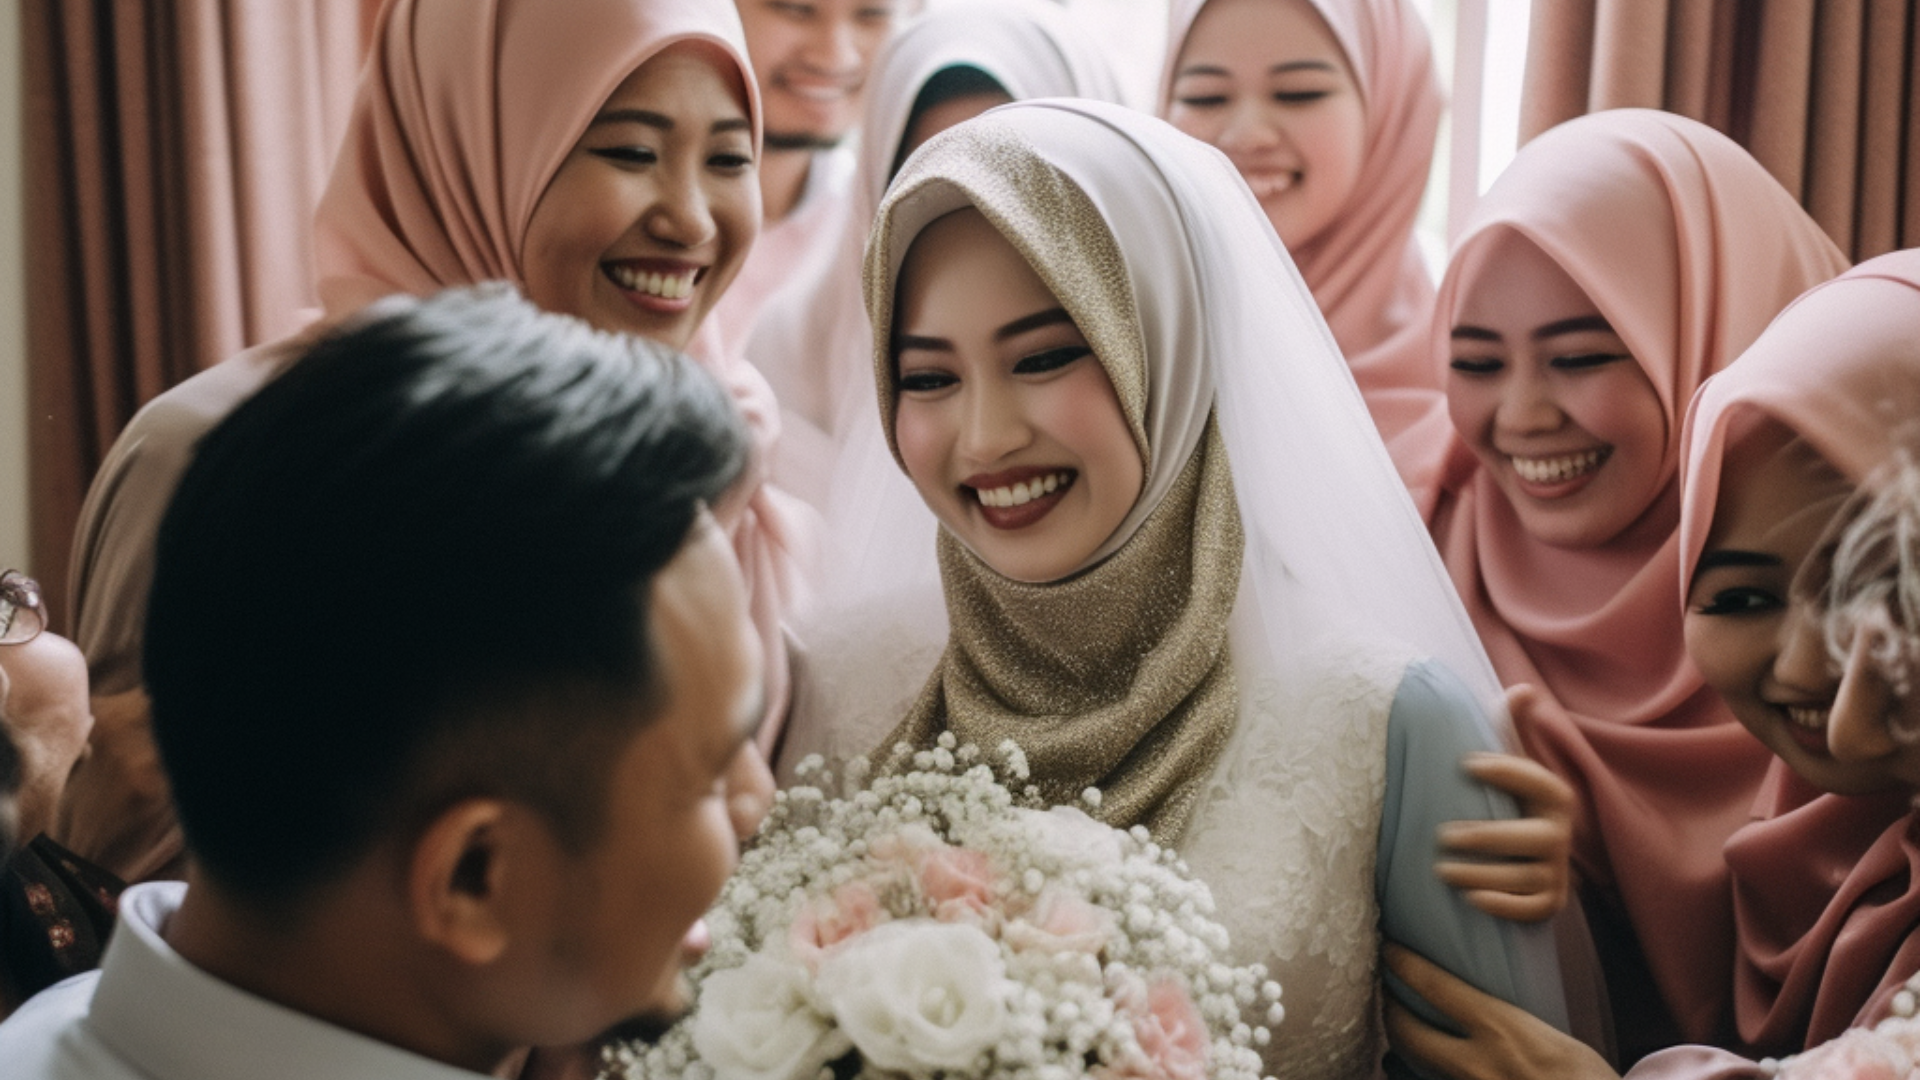 wedding planning wedding communication toxic family wedding malaysia wedding couple